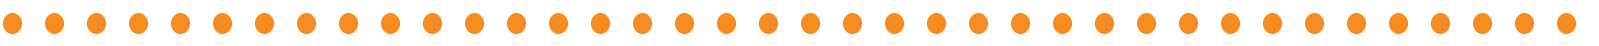 dottedline-orange